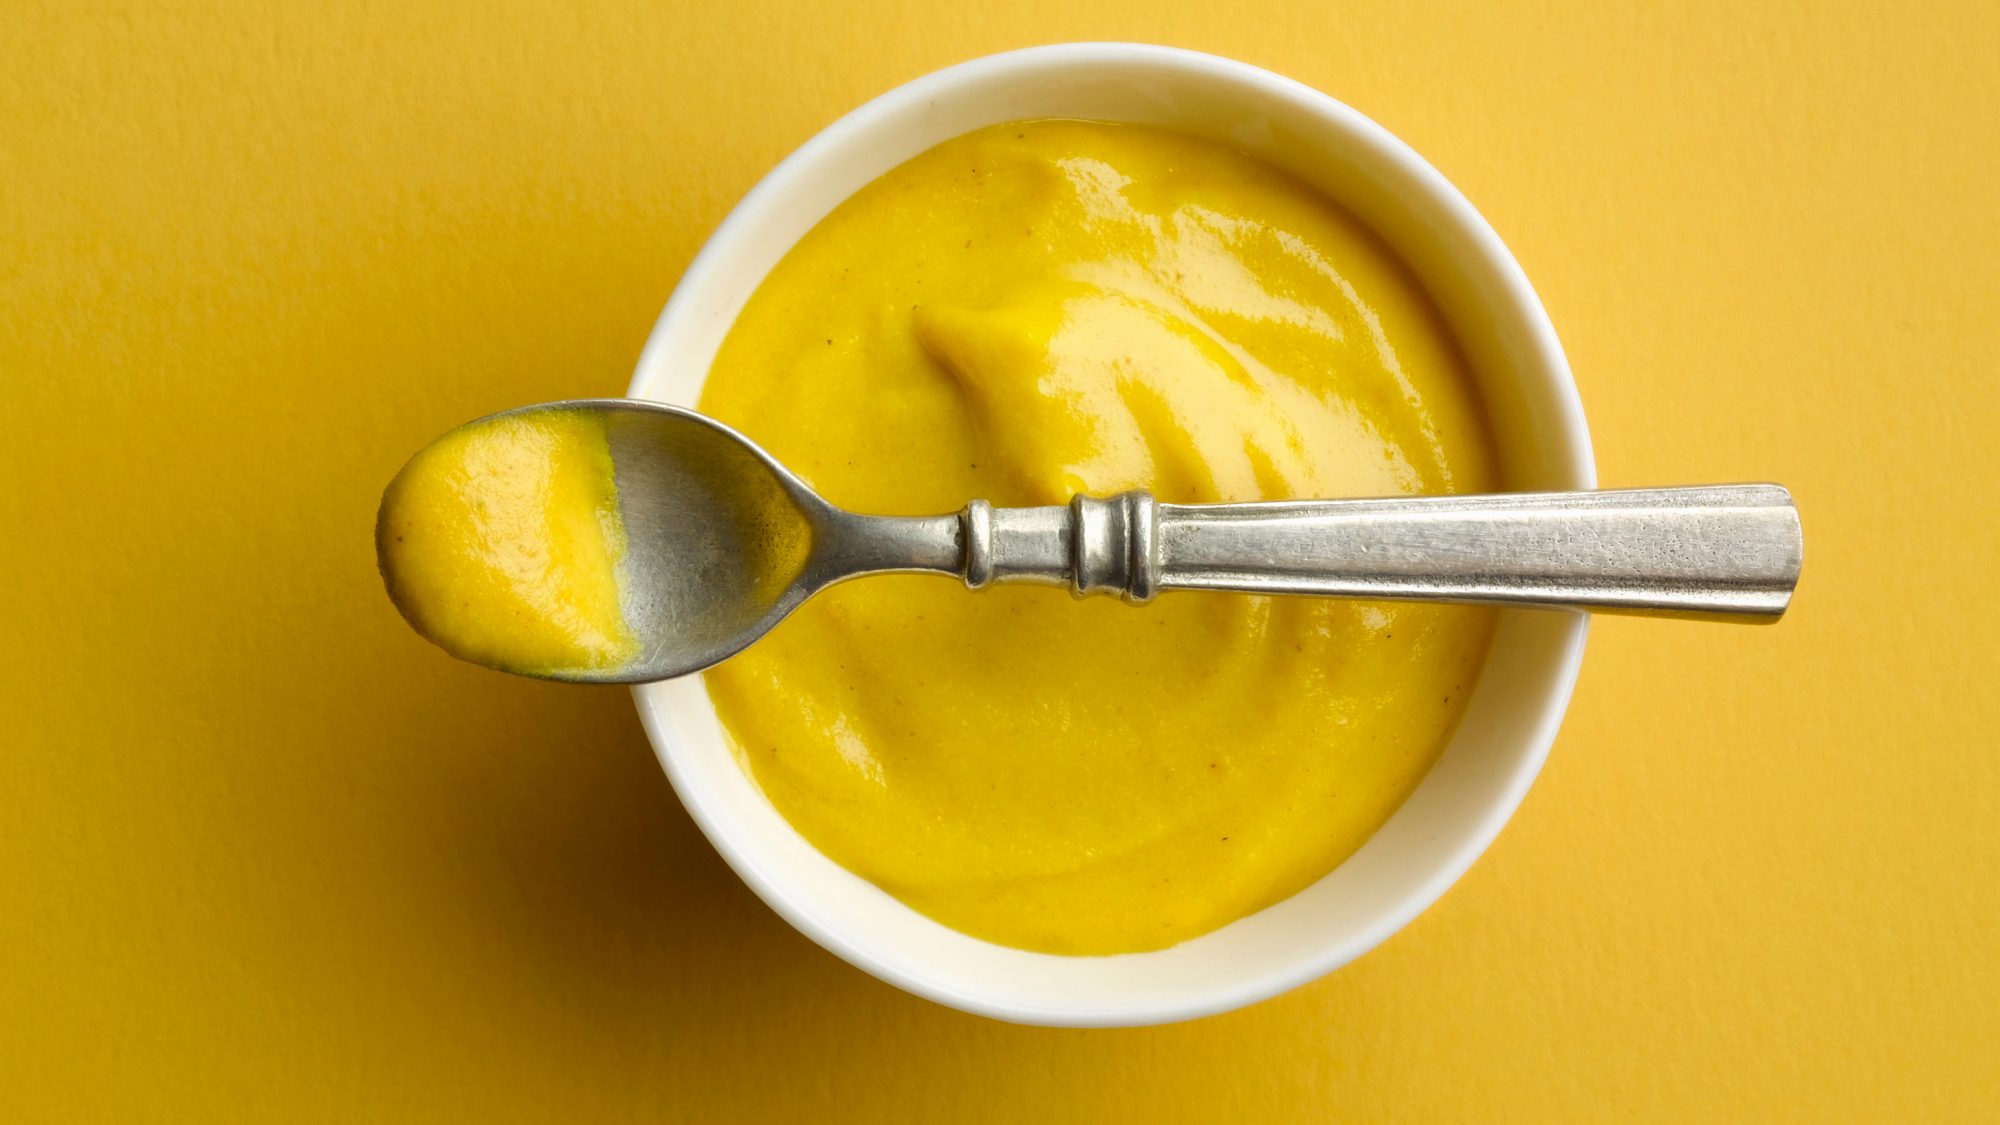 do not refrigerate - homemade mustard